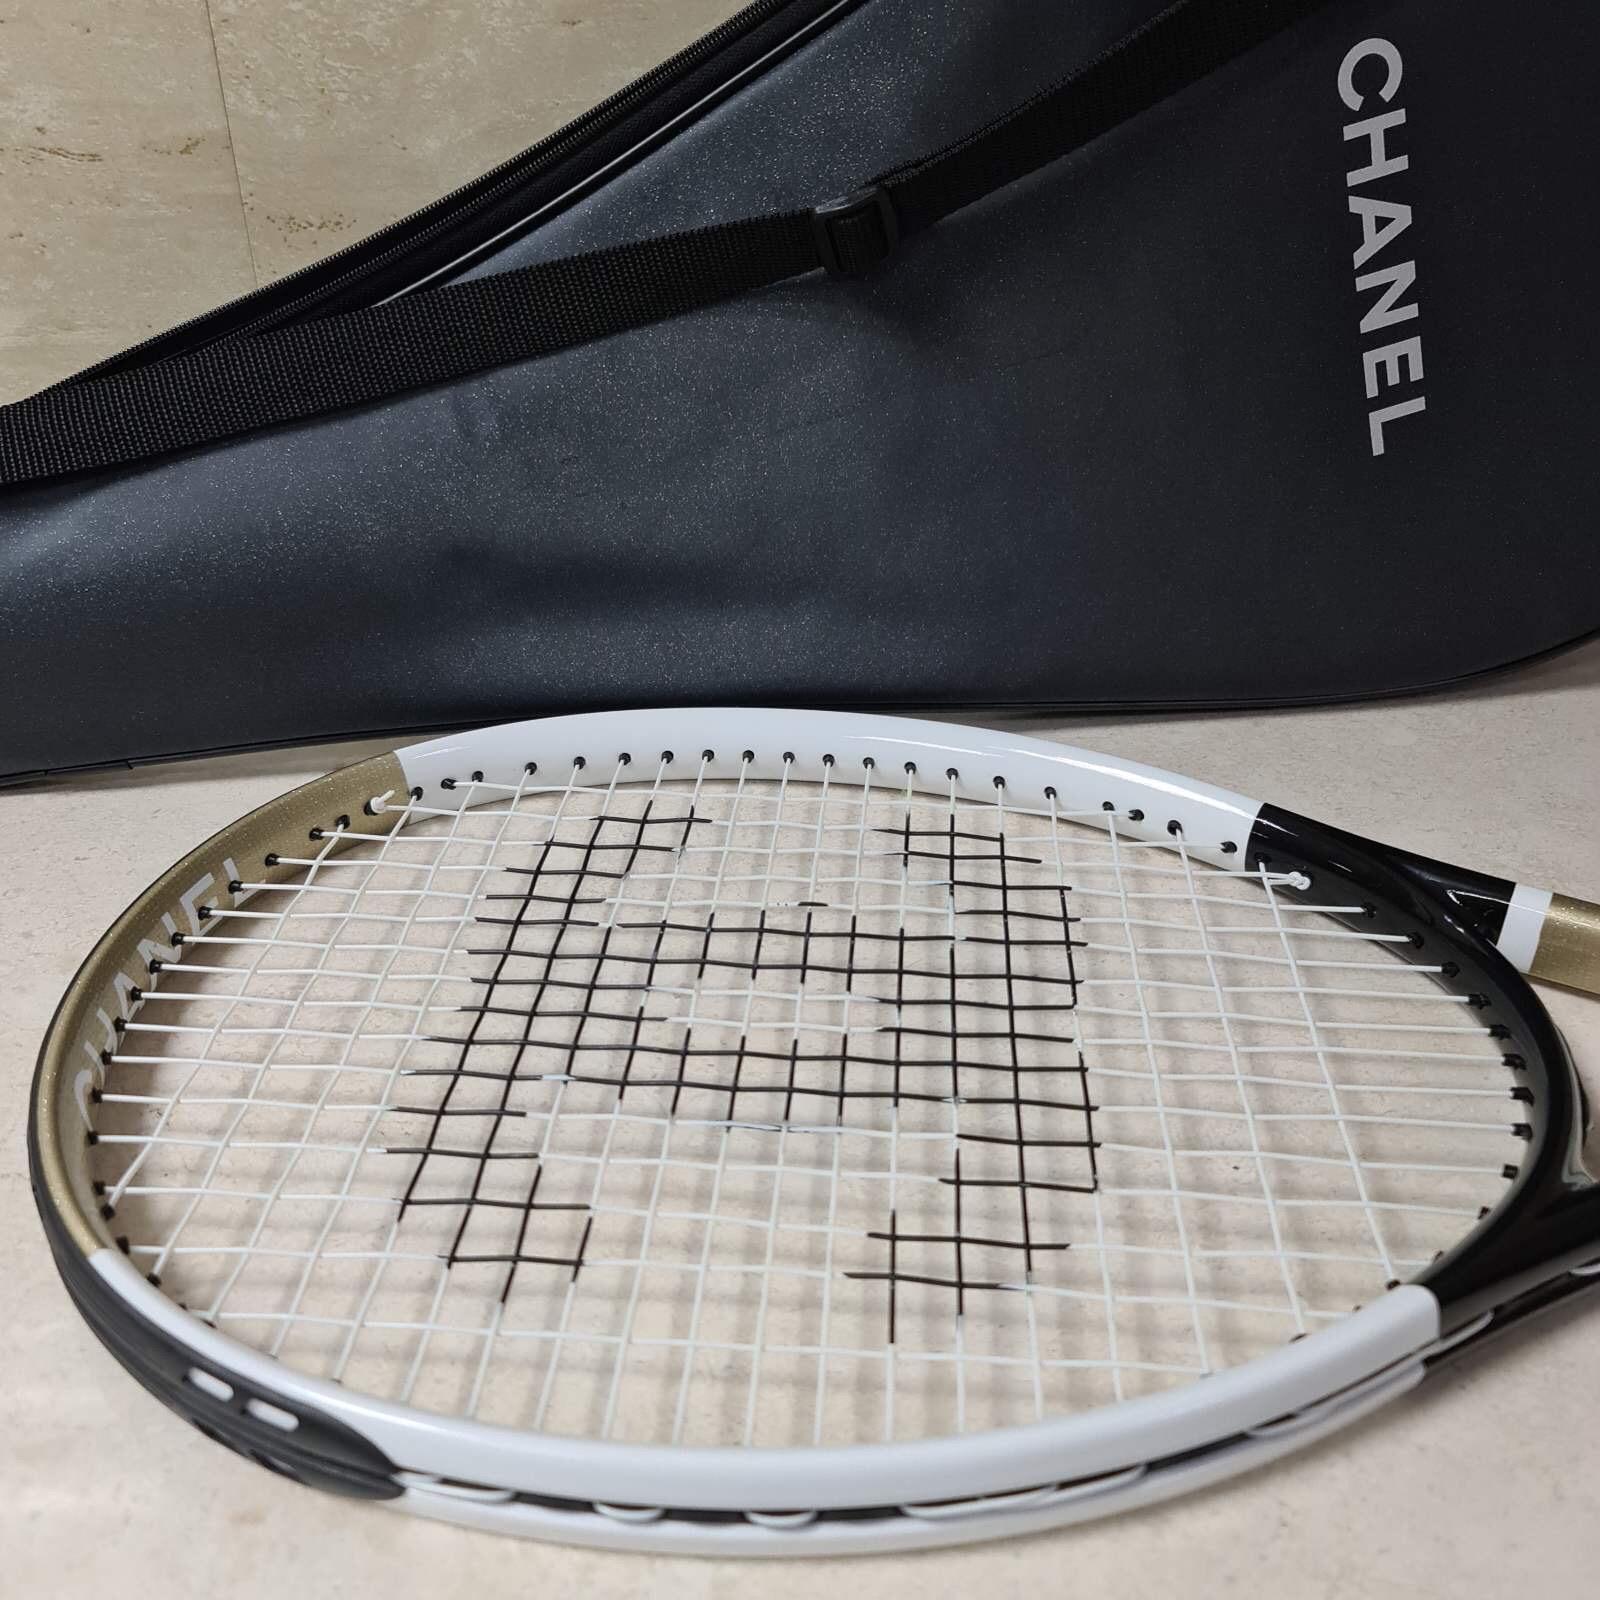 Chanel Tennis Racket Set 1